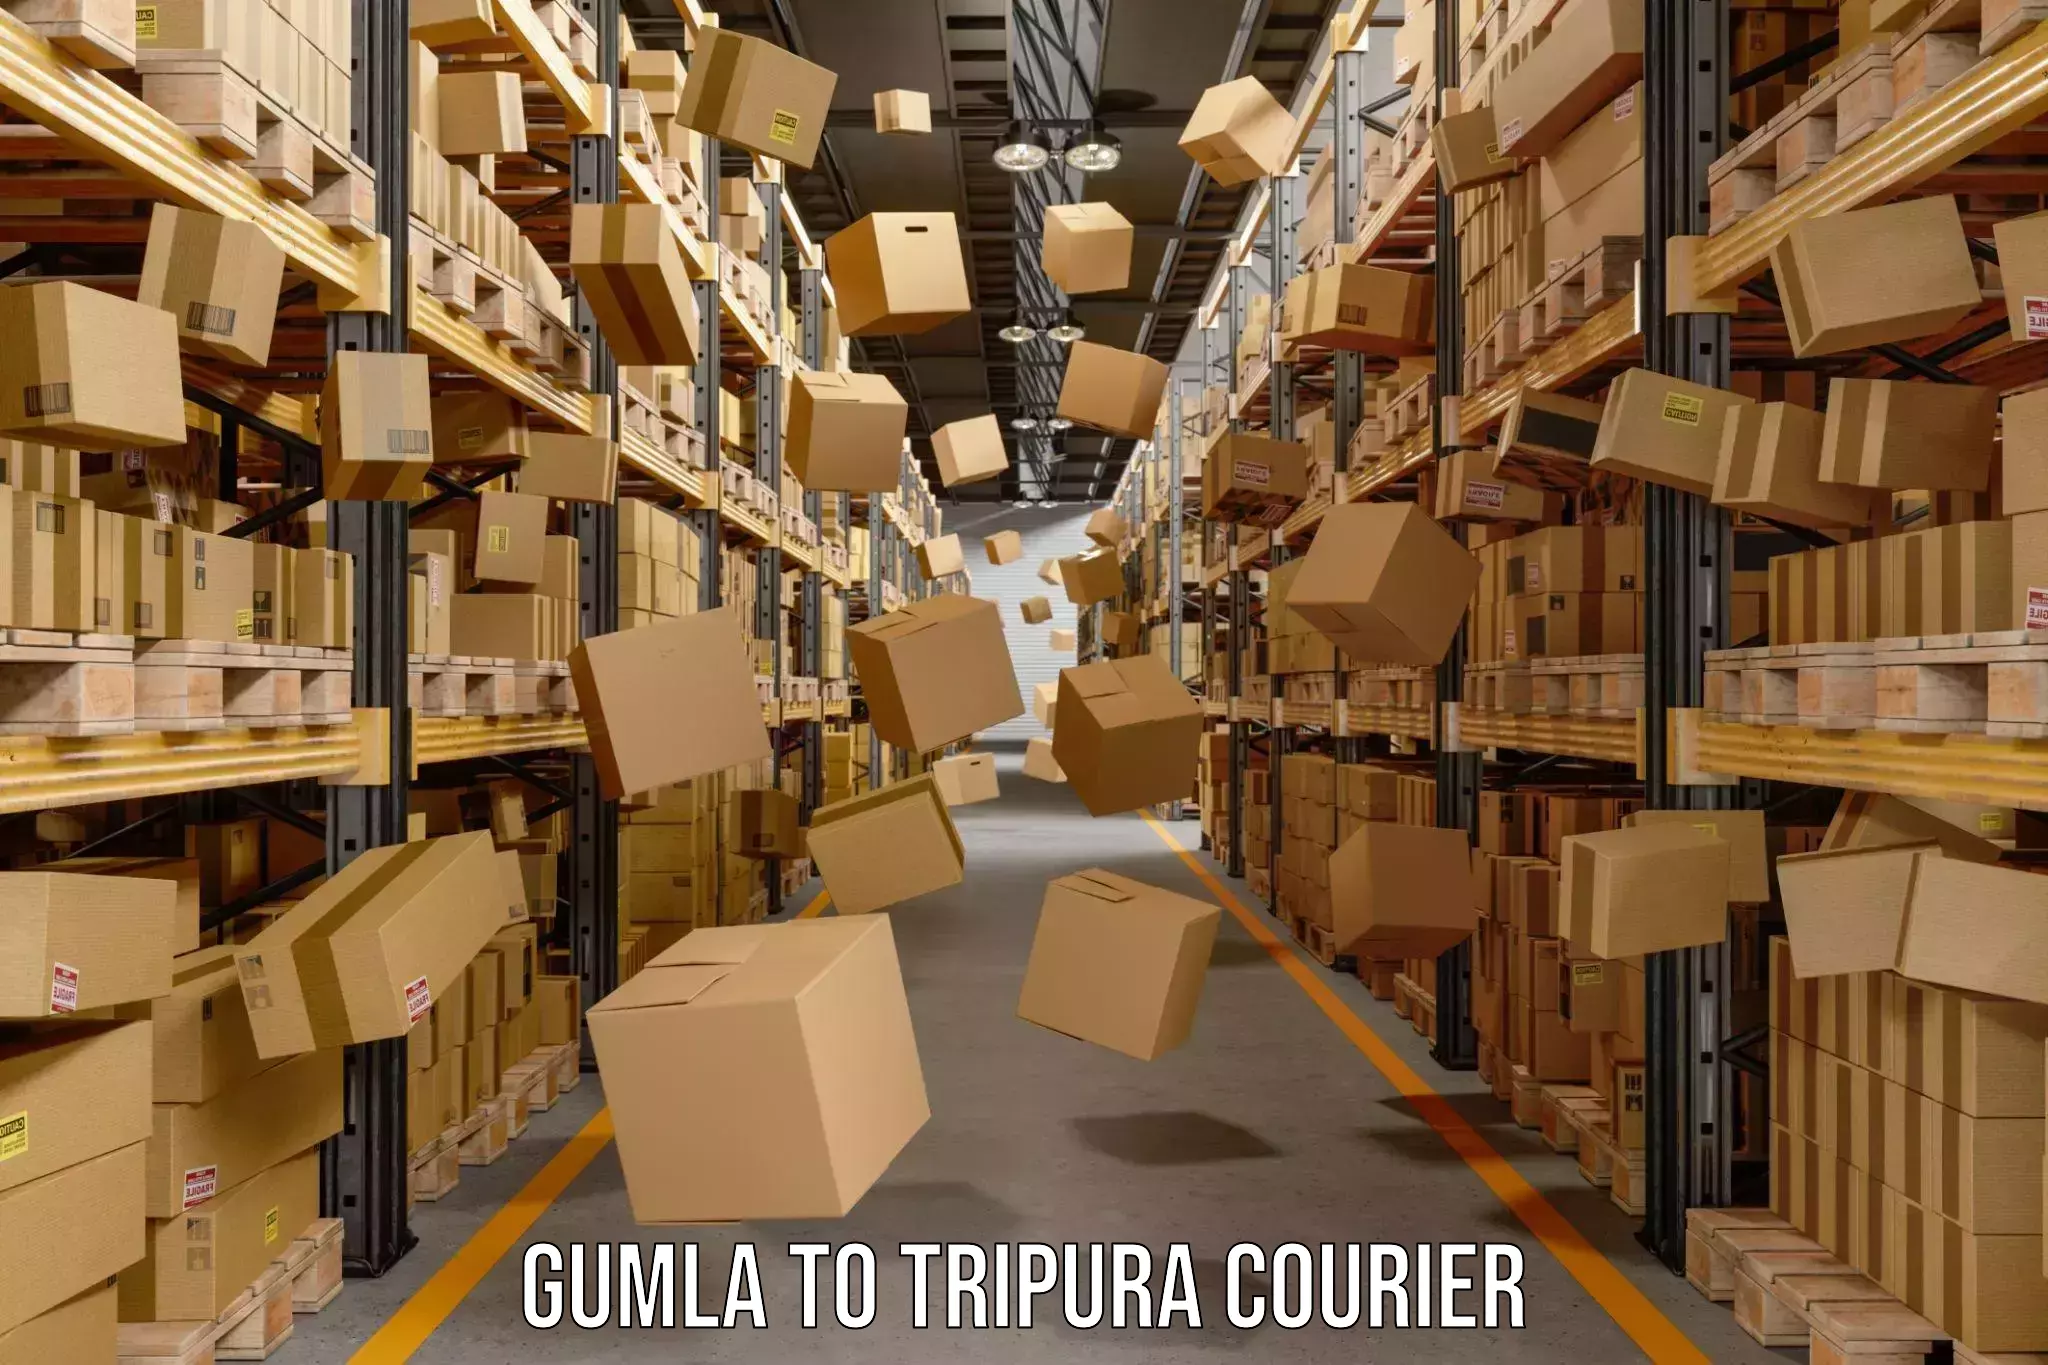 Courier service comparison Gumla to Tripura